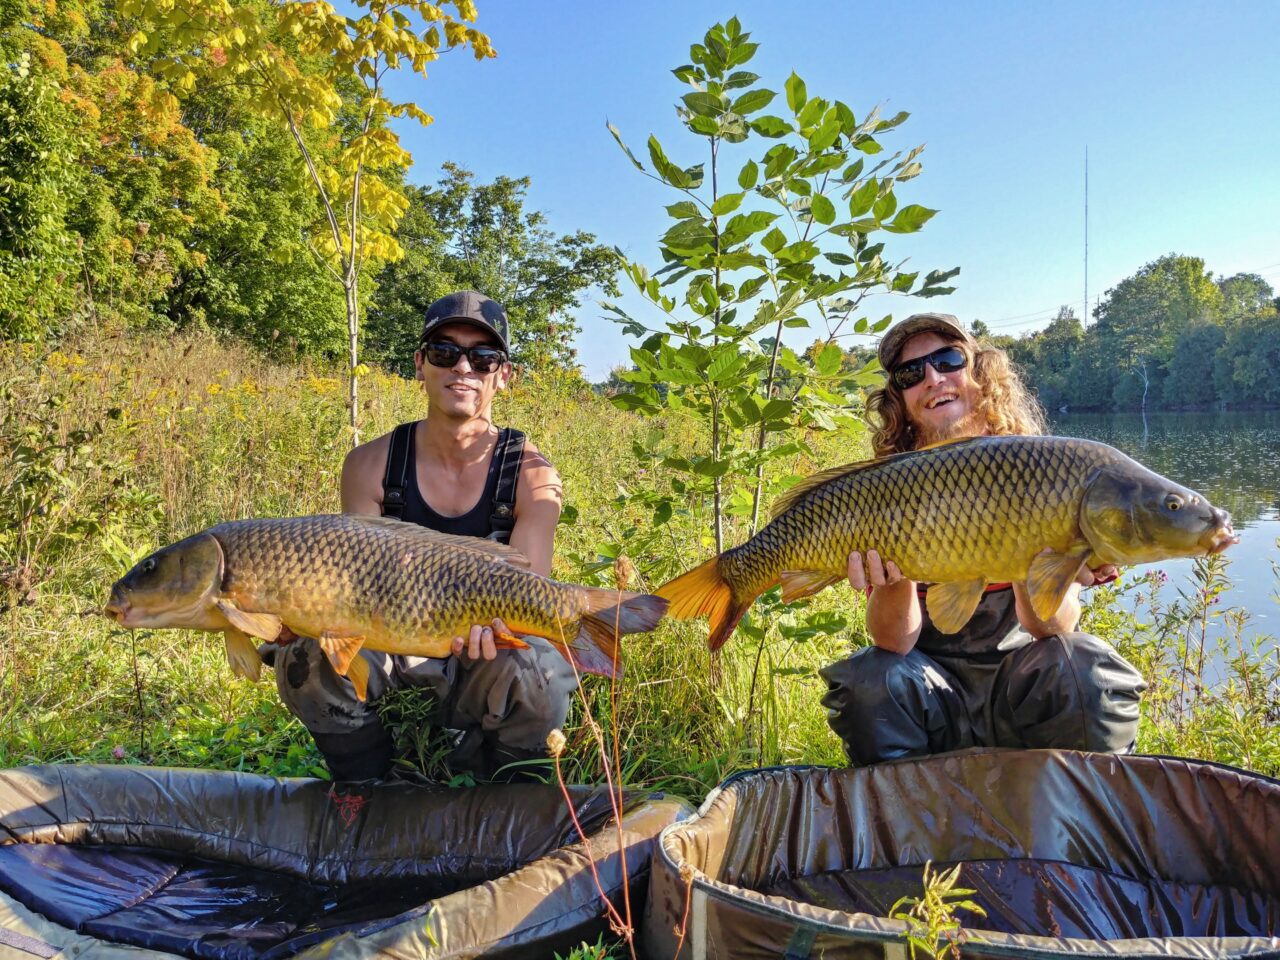 Two people holding large fish (carp)